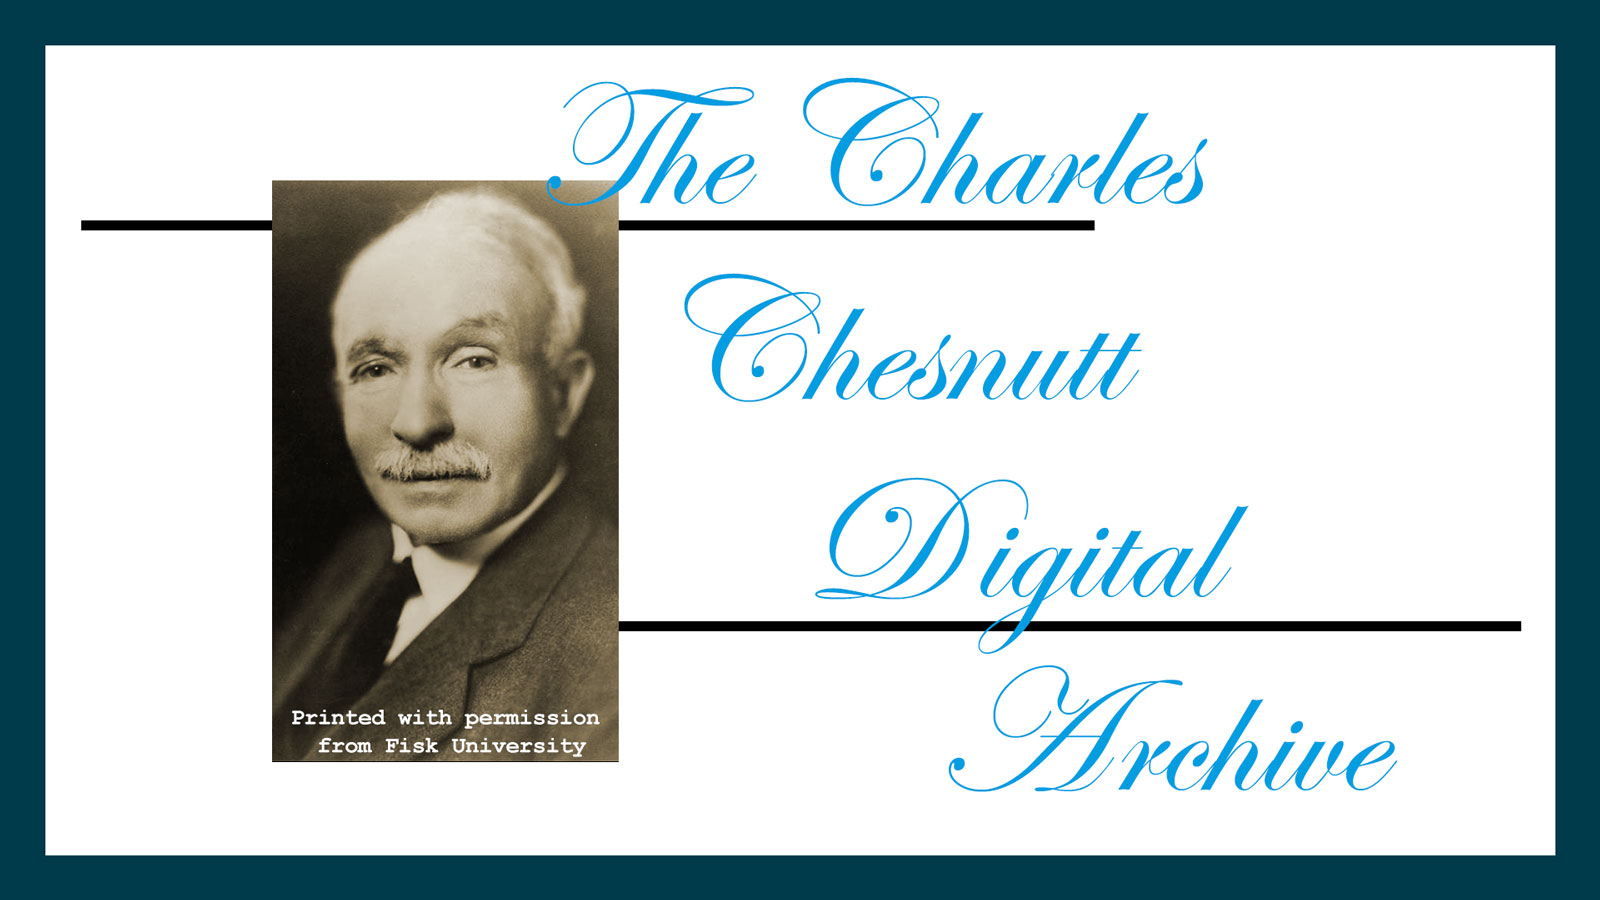 Chesnutt Archive website; links to news story